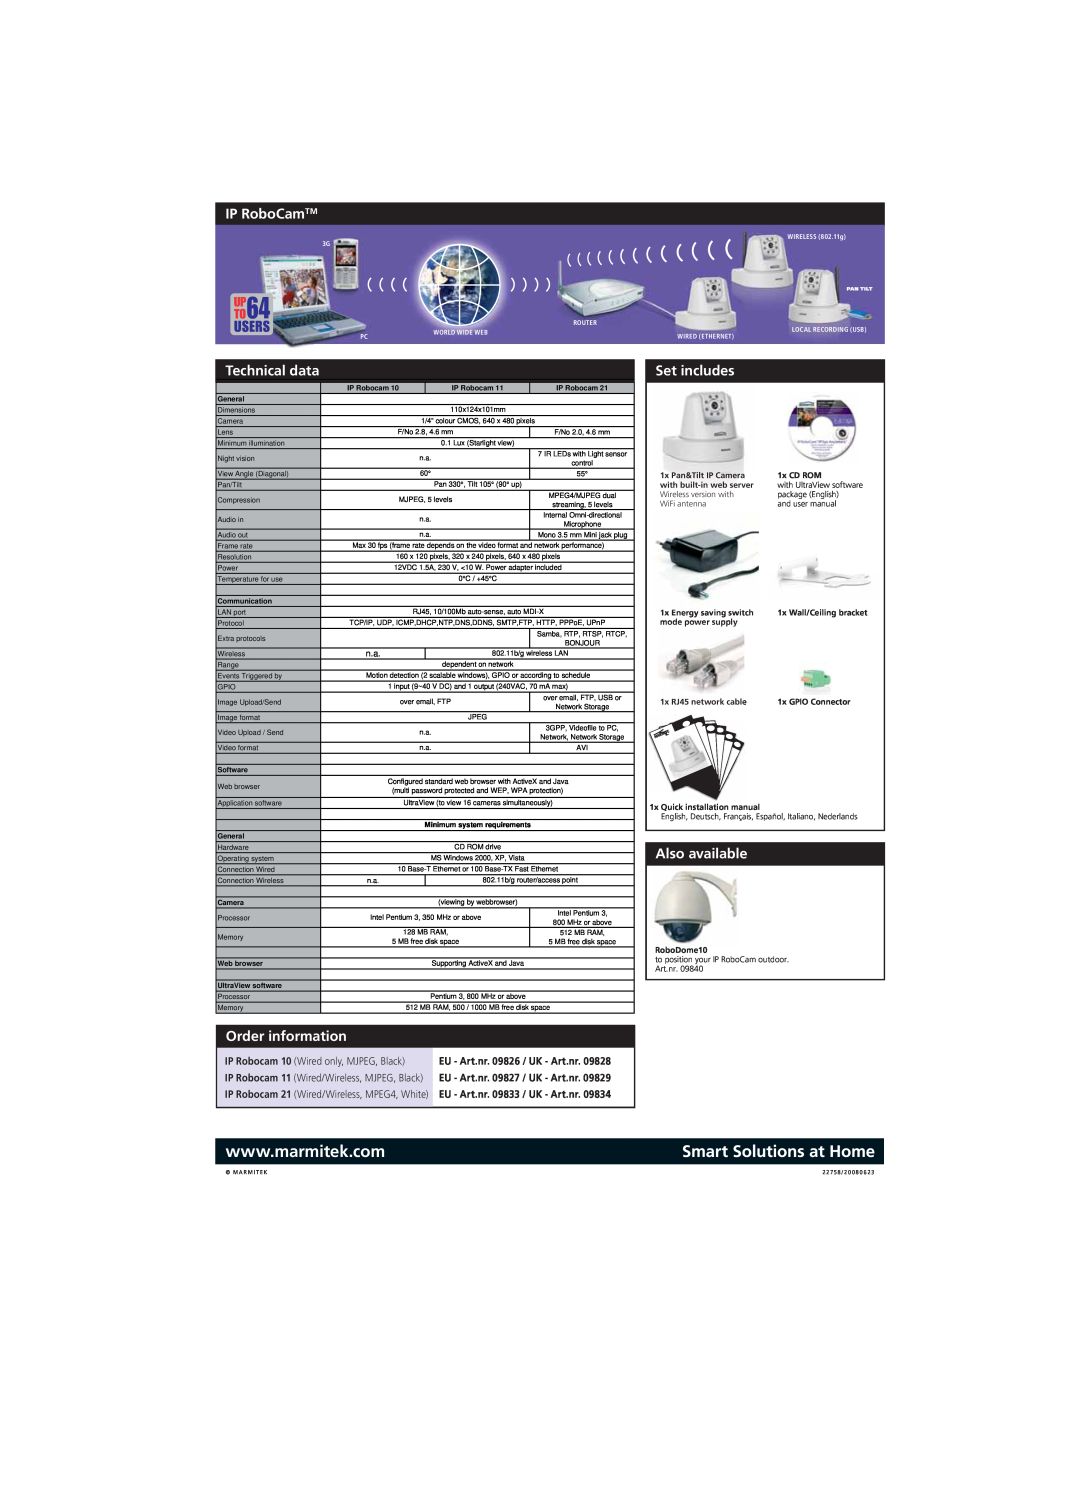 Marmitek manual IP RoboCamTM, Technical data, Order information, Set includes, Also available, Wired only, MJPEG, Black 